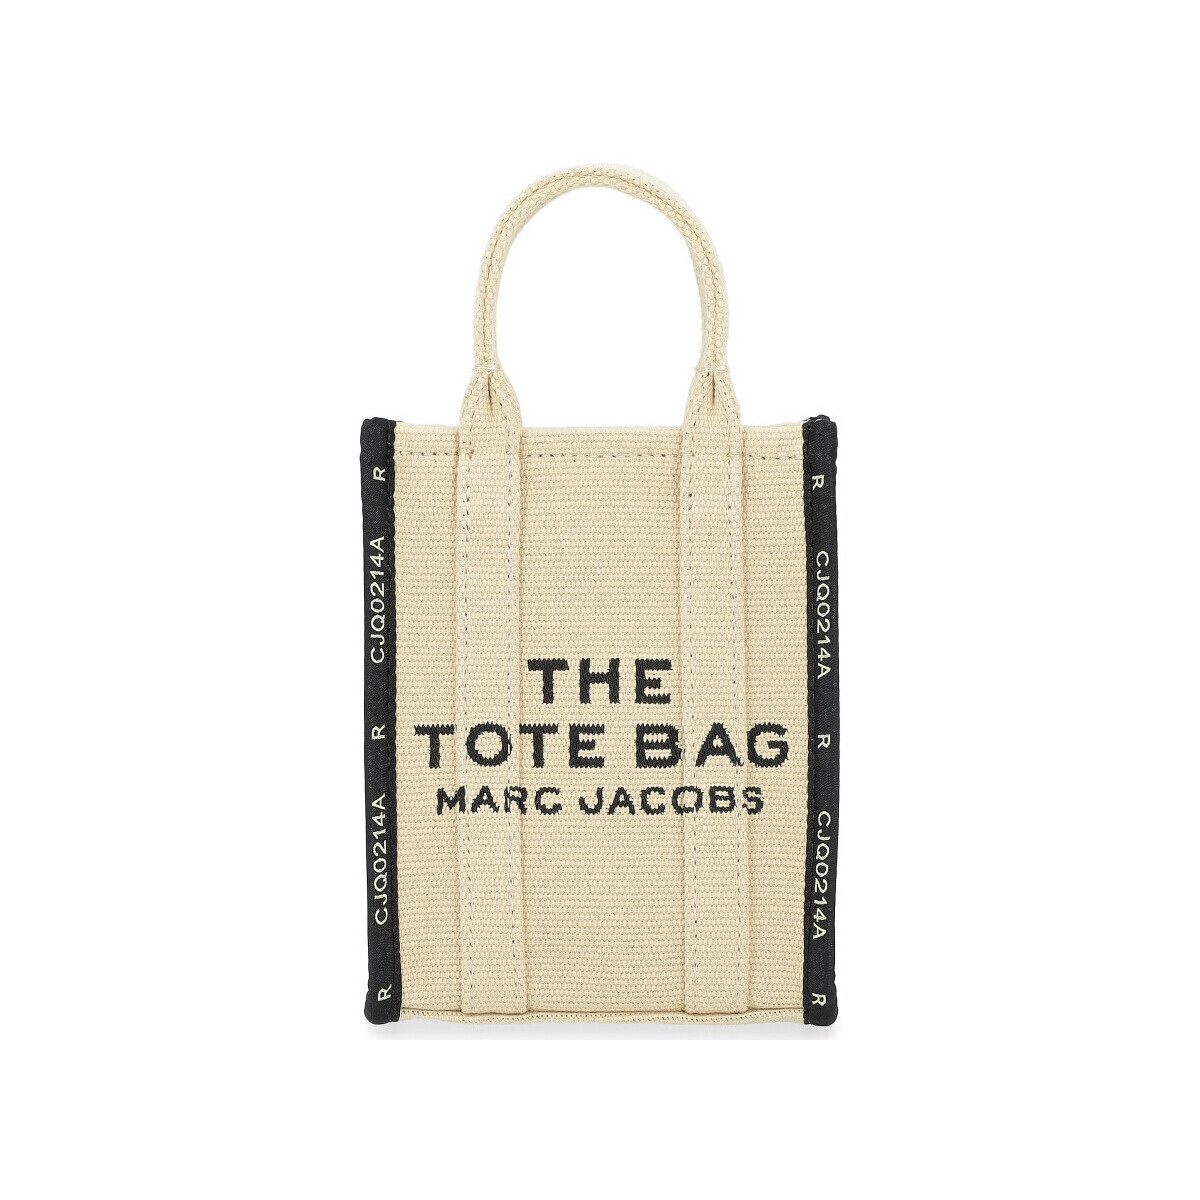 Borse Donna Borse Marc Jacobs Borsa  The Jacquard Mini Tote Bag color sabbia Altri